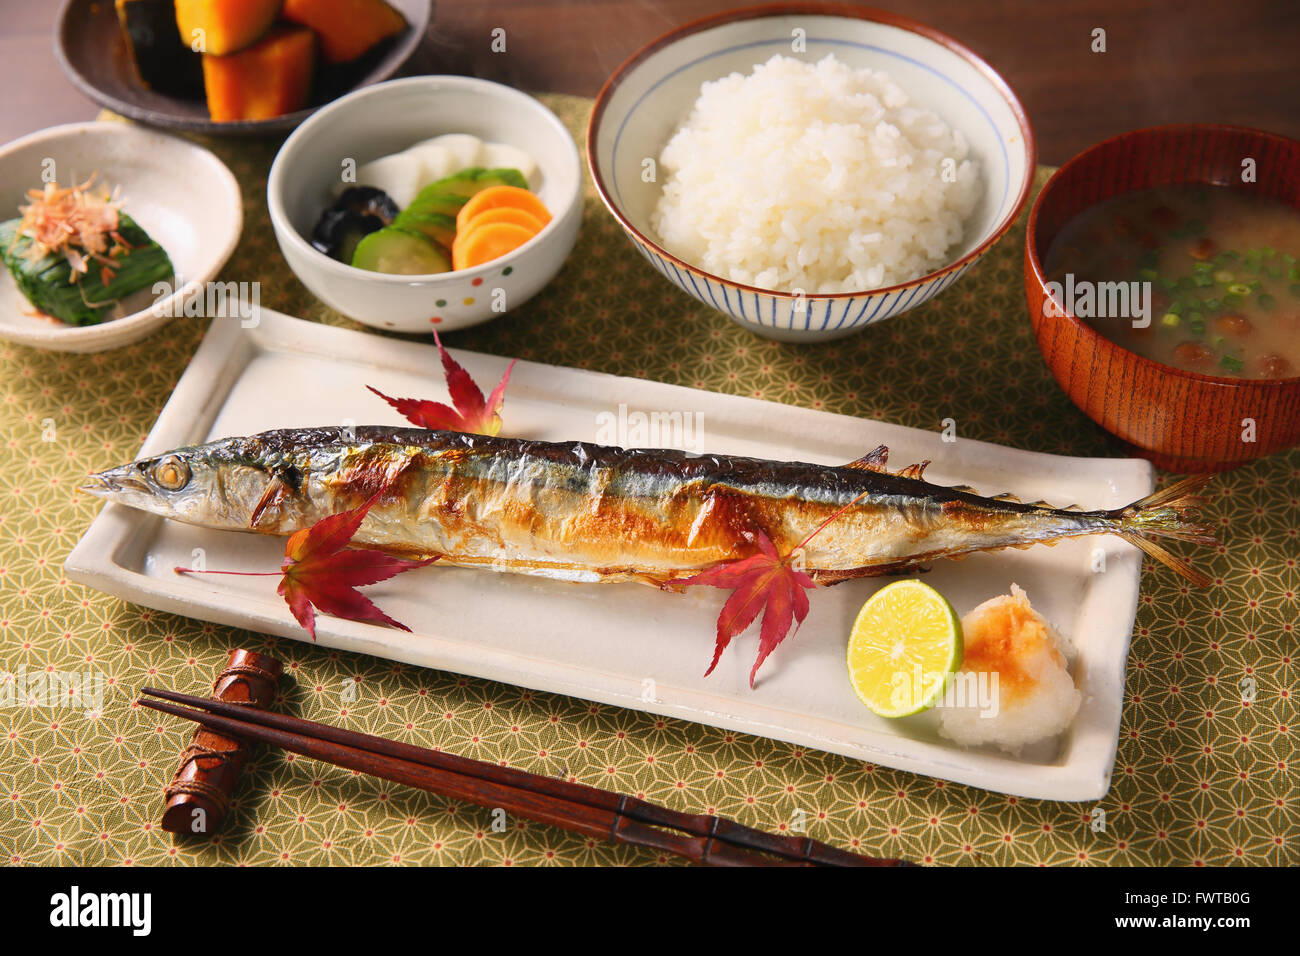 Japanese style Pacific saury dish Stock Photo